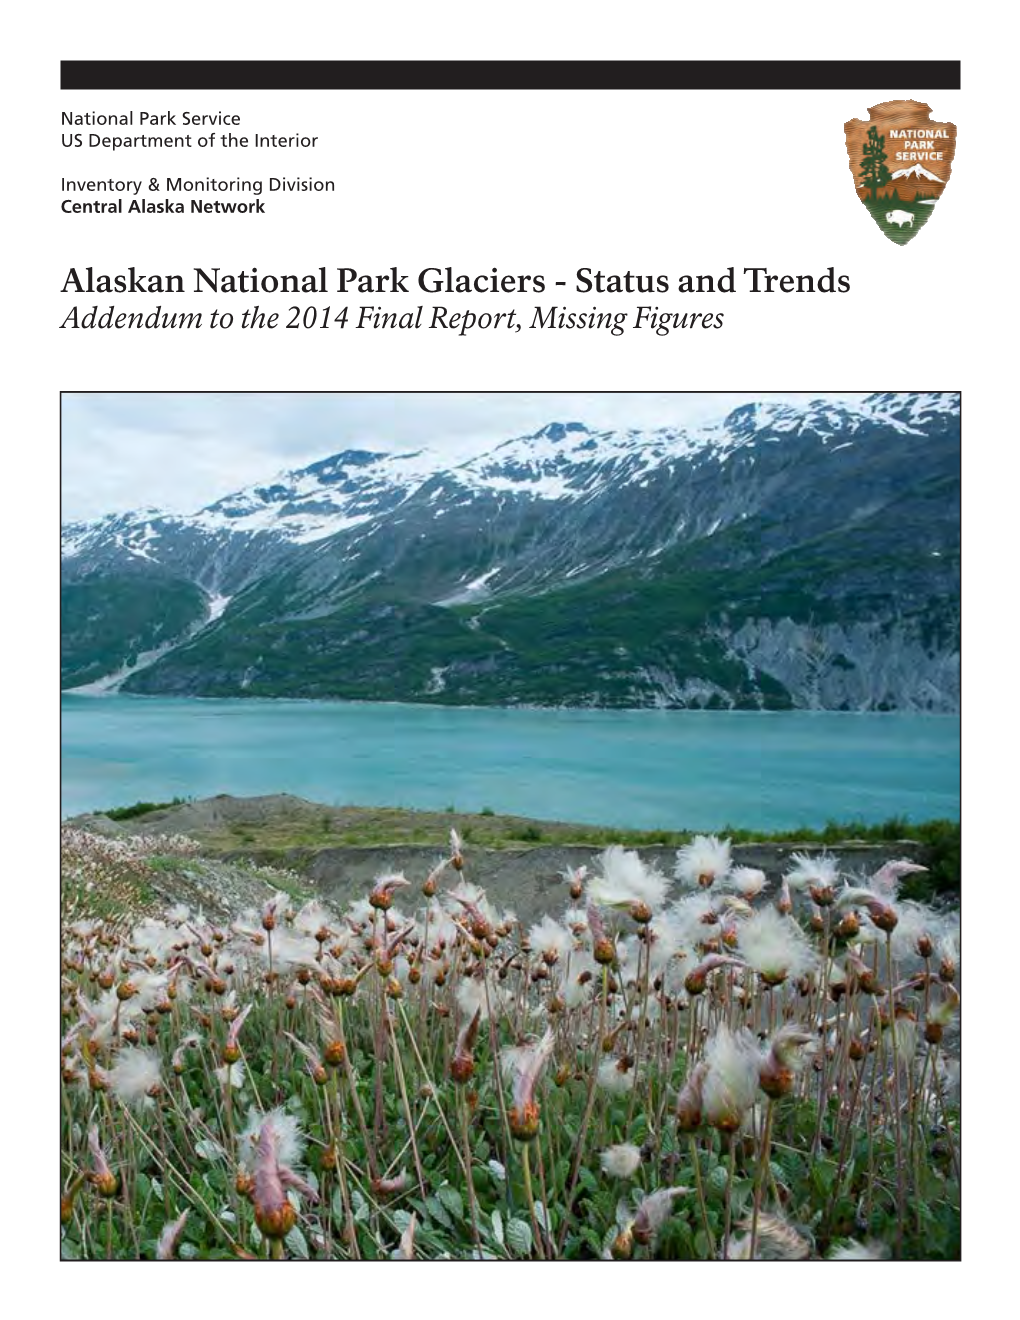 Addendum to Alaska Glacier Status and Trends Report